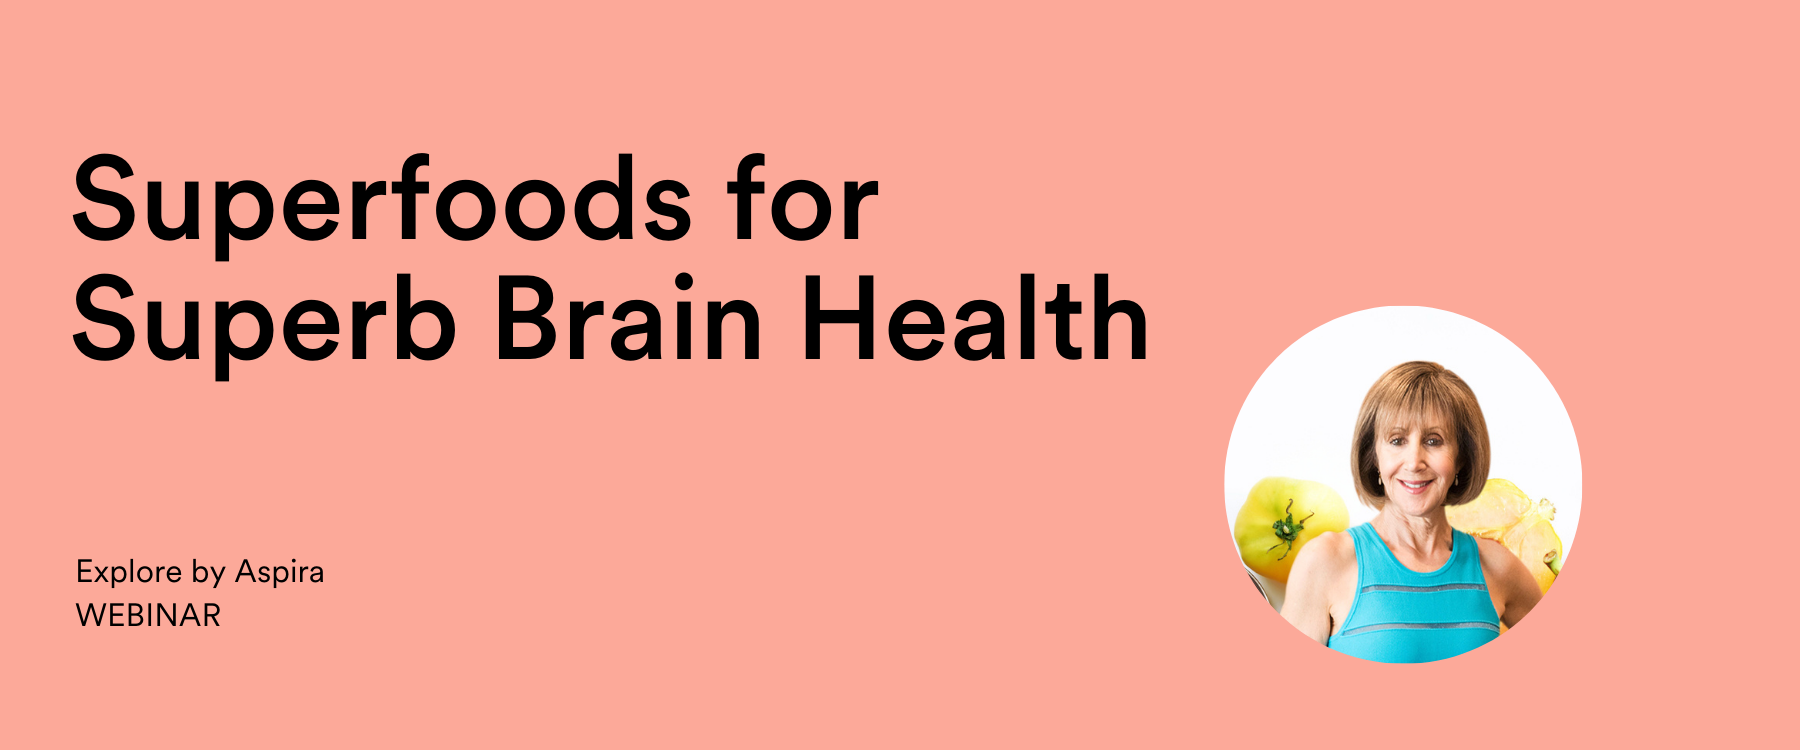 Superfood for Superb Brain Health